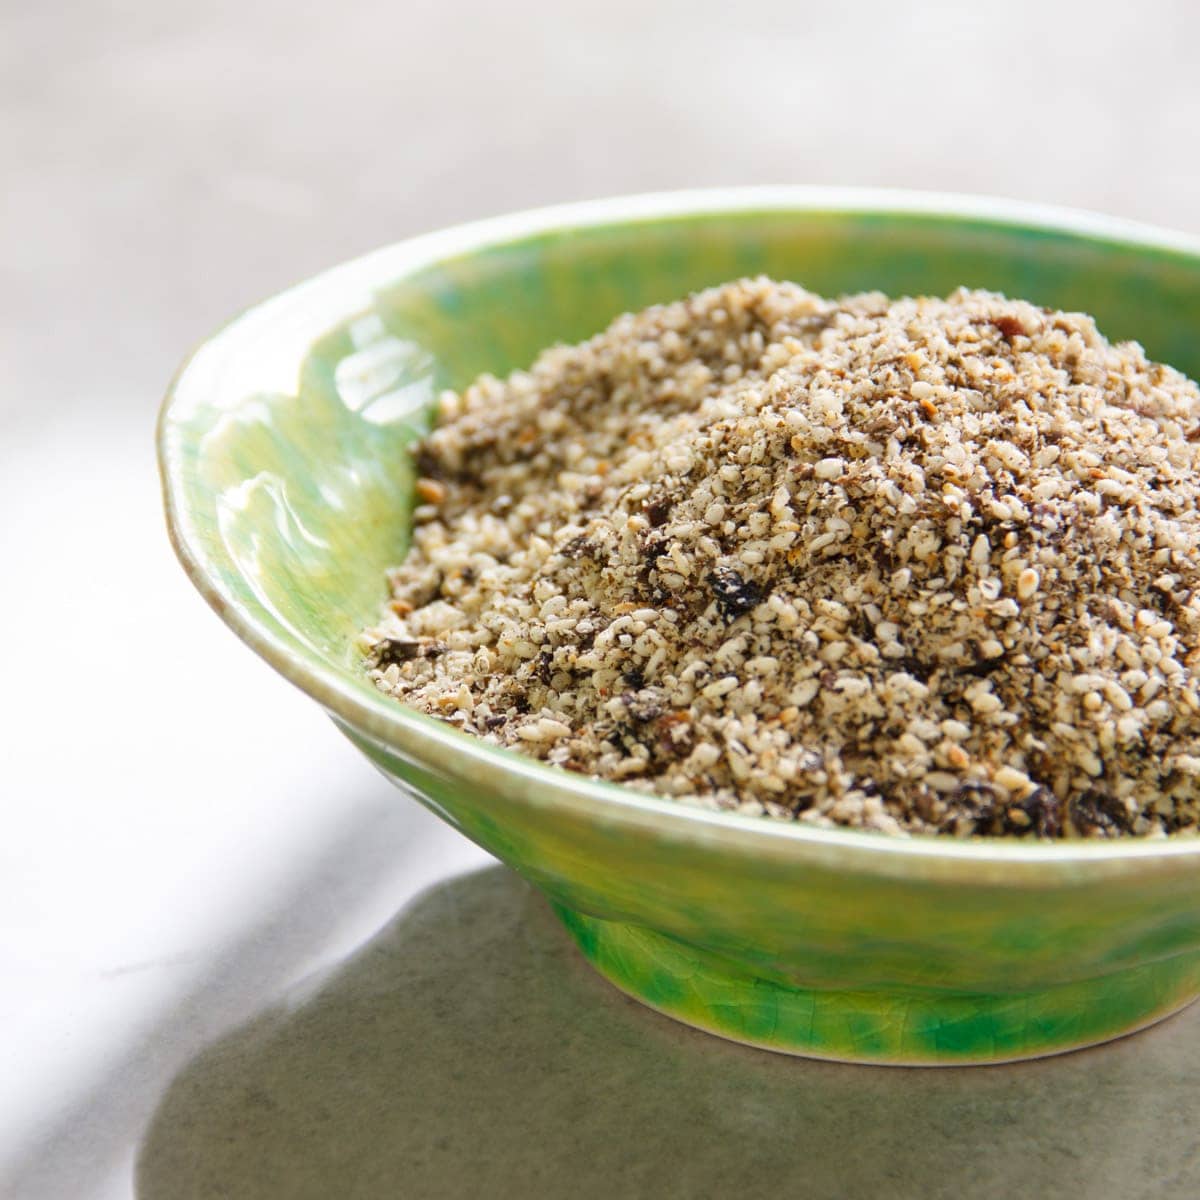 Eden Seaweed Gomasio, Sesame Salt, Organic Sesame Seeds, Sea Salt